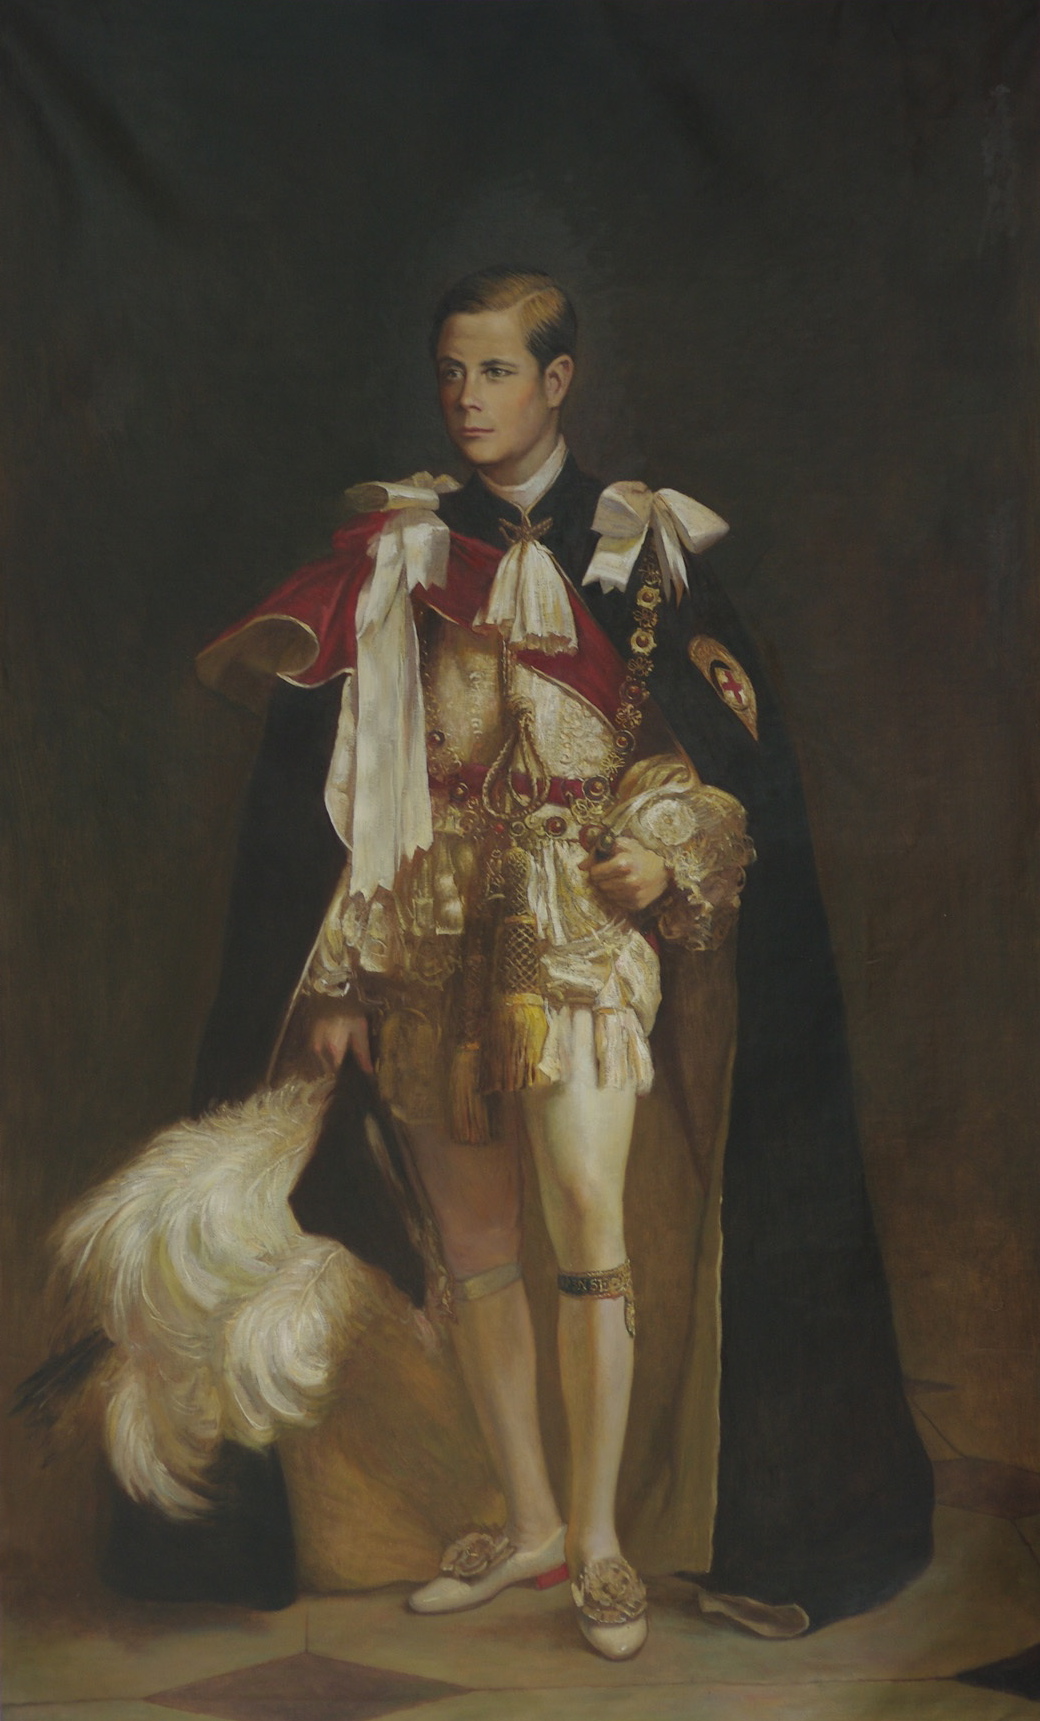 Prince of Wales - Edward VIII